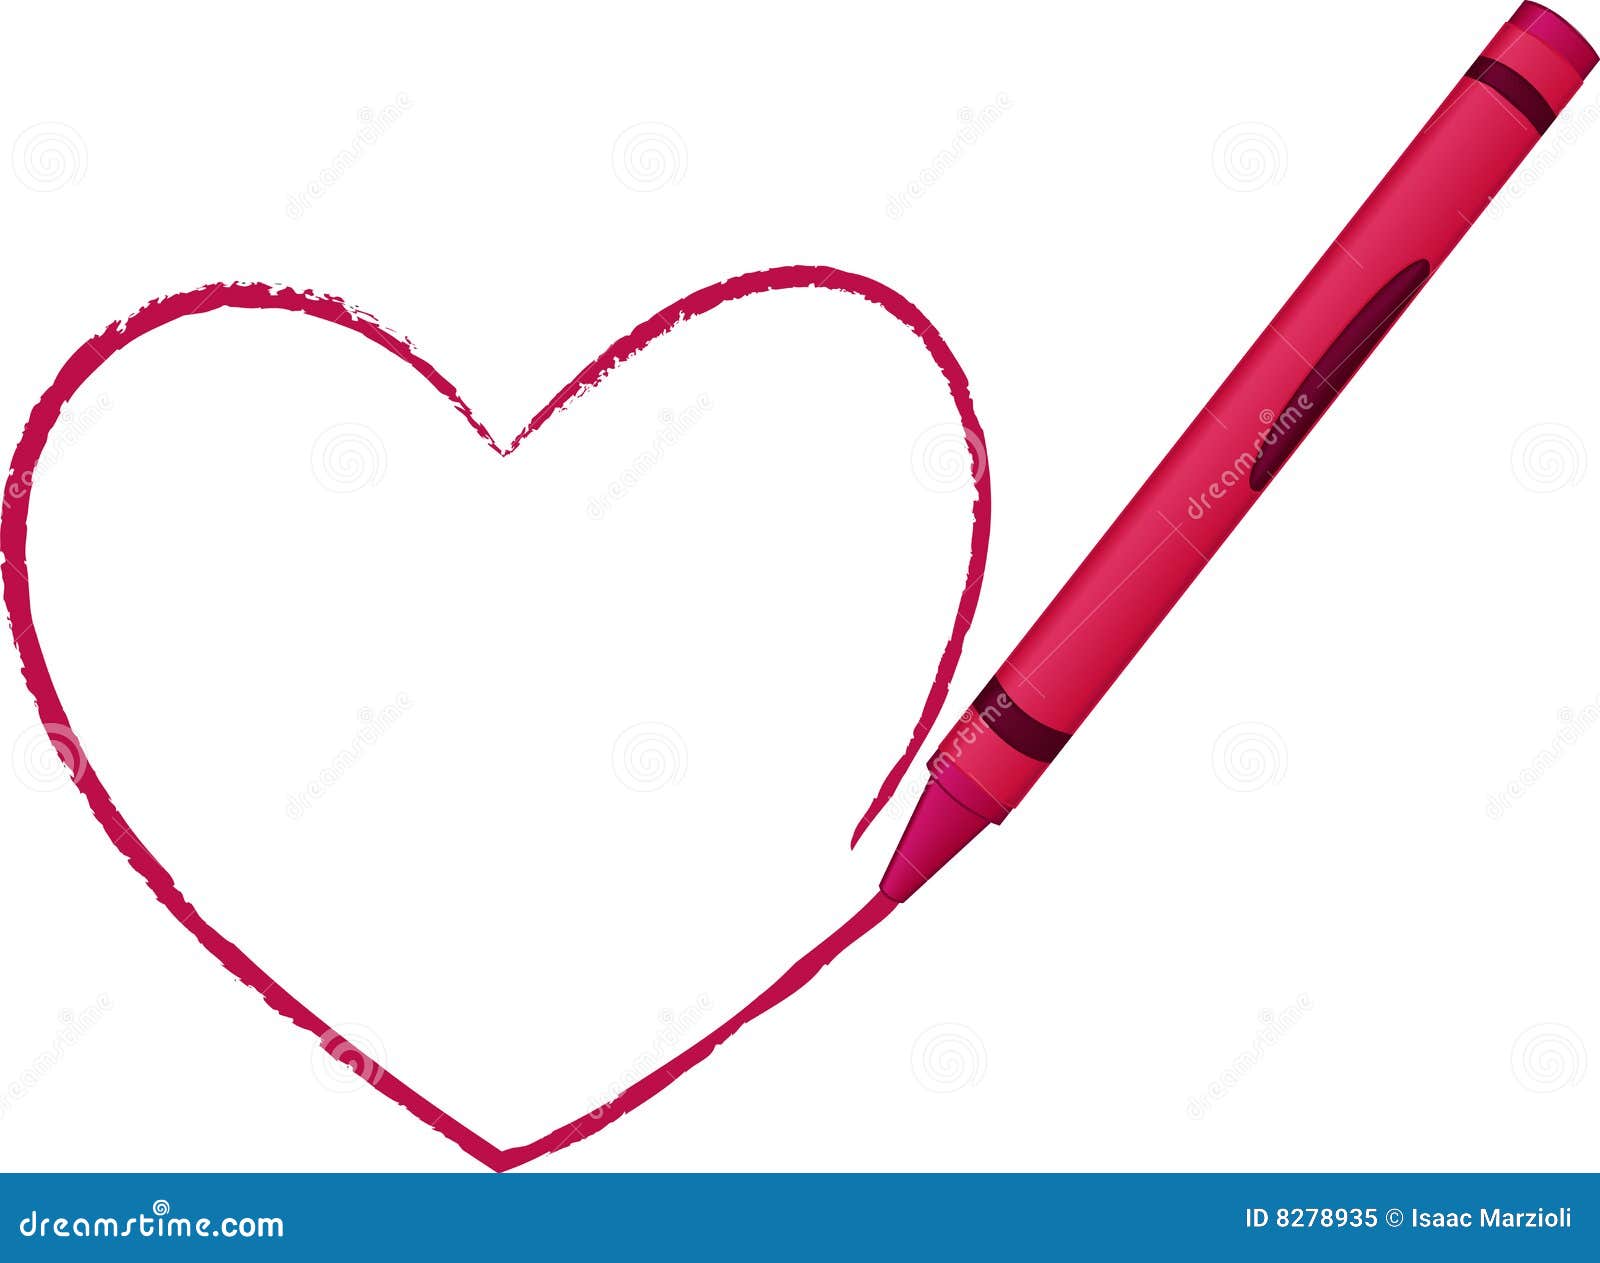 crayon drawn heart -  